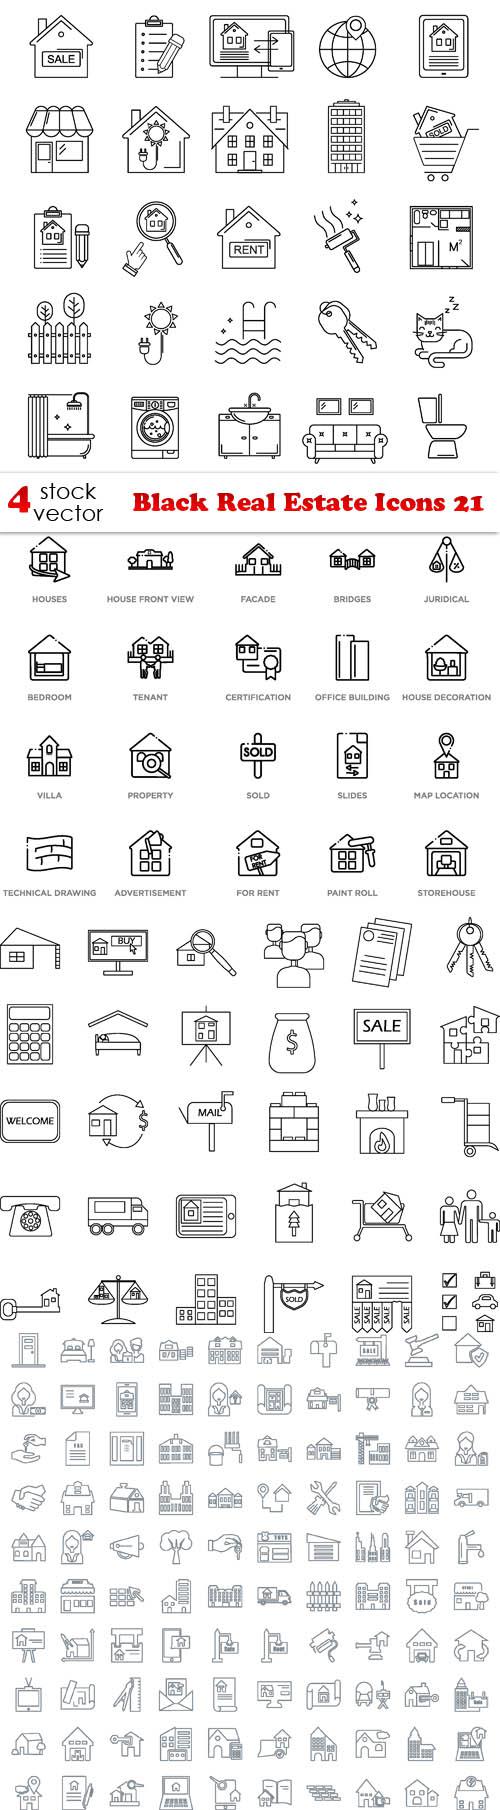 Black Real Estate Icons 21